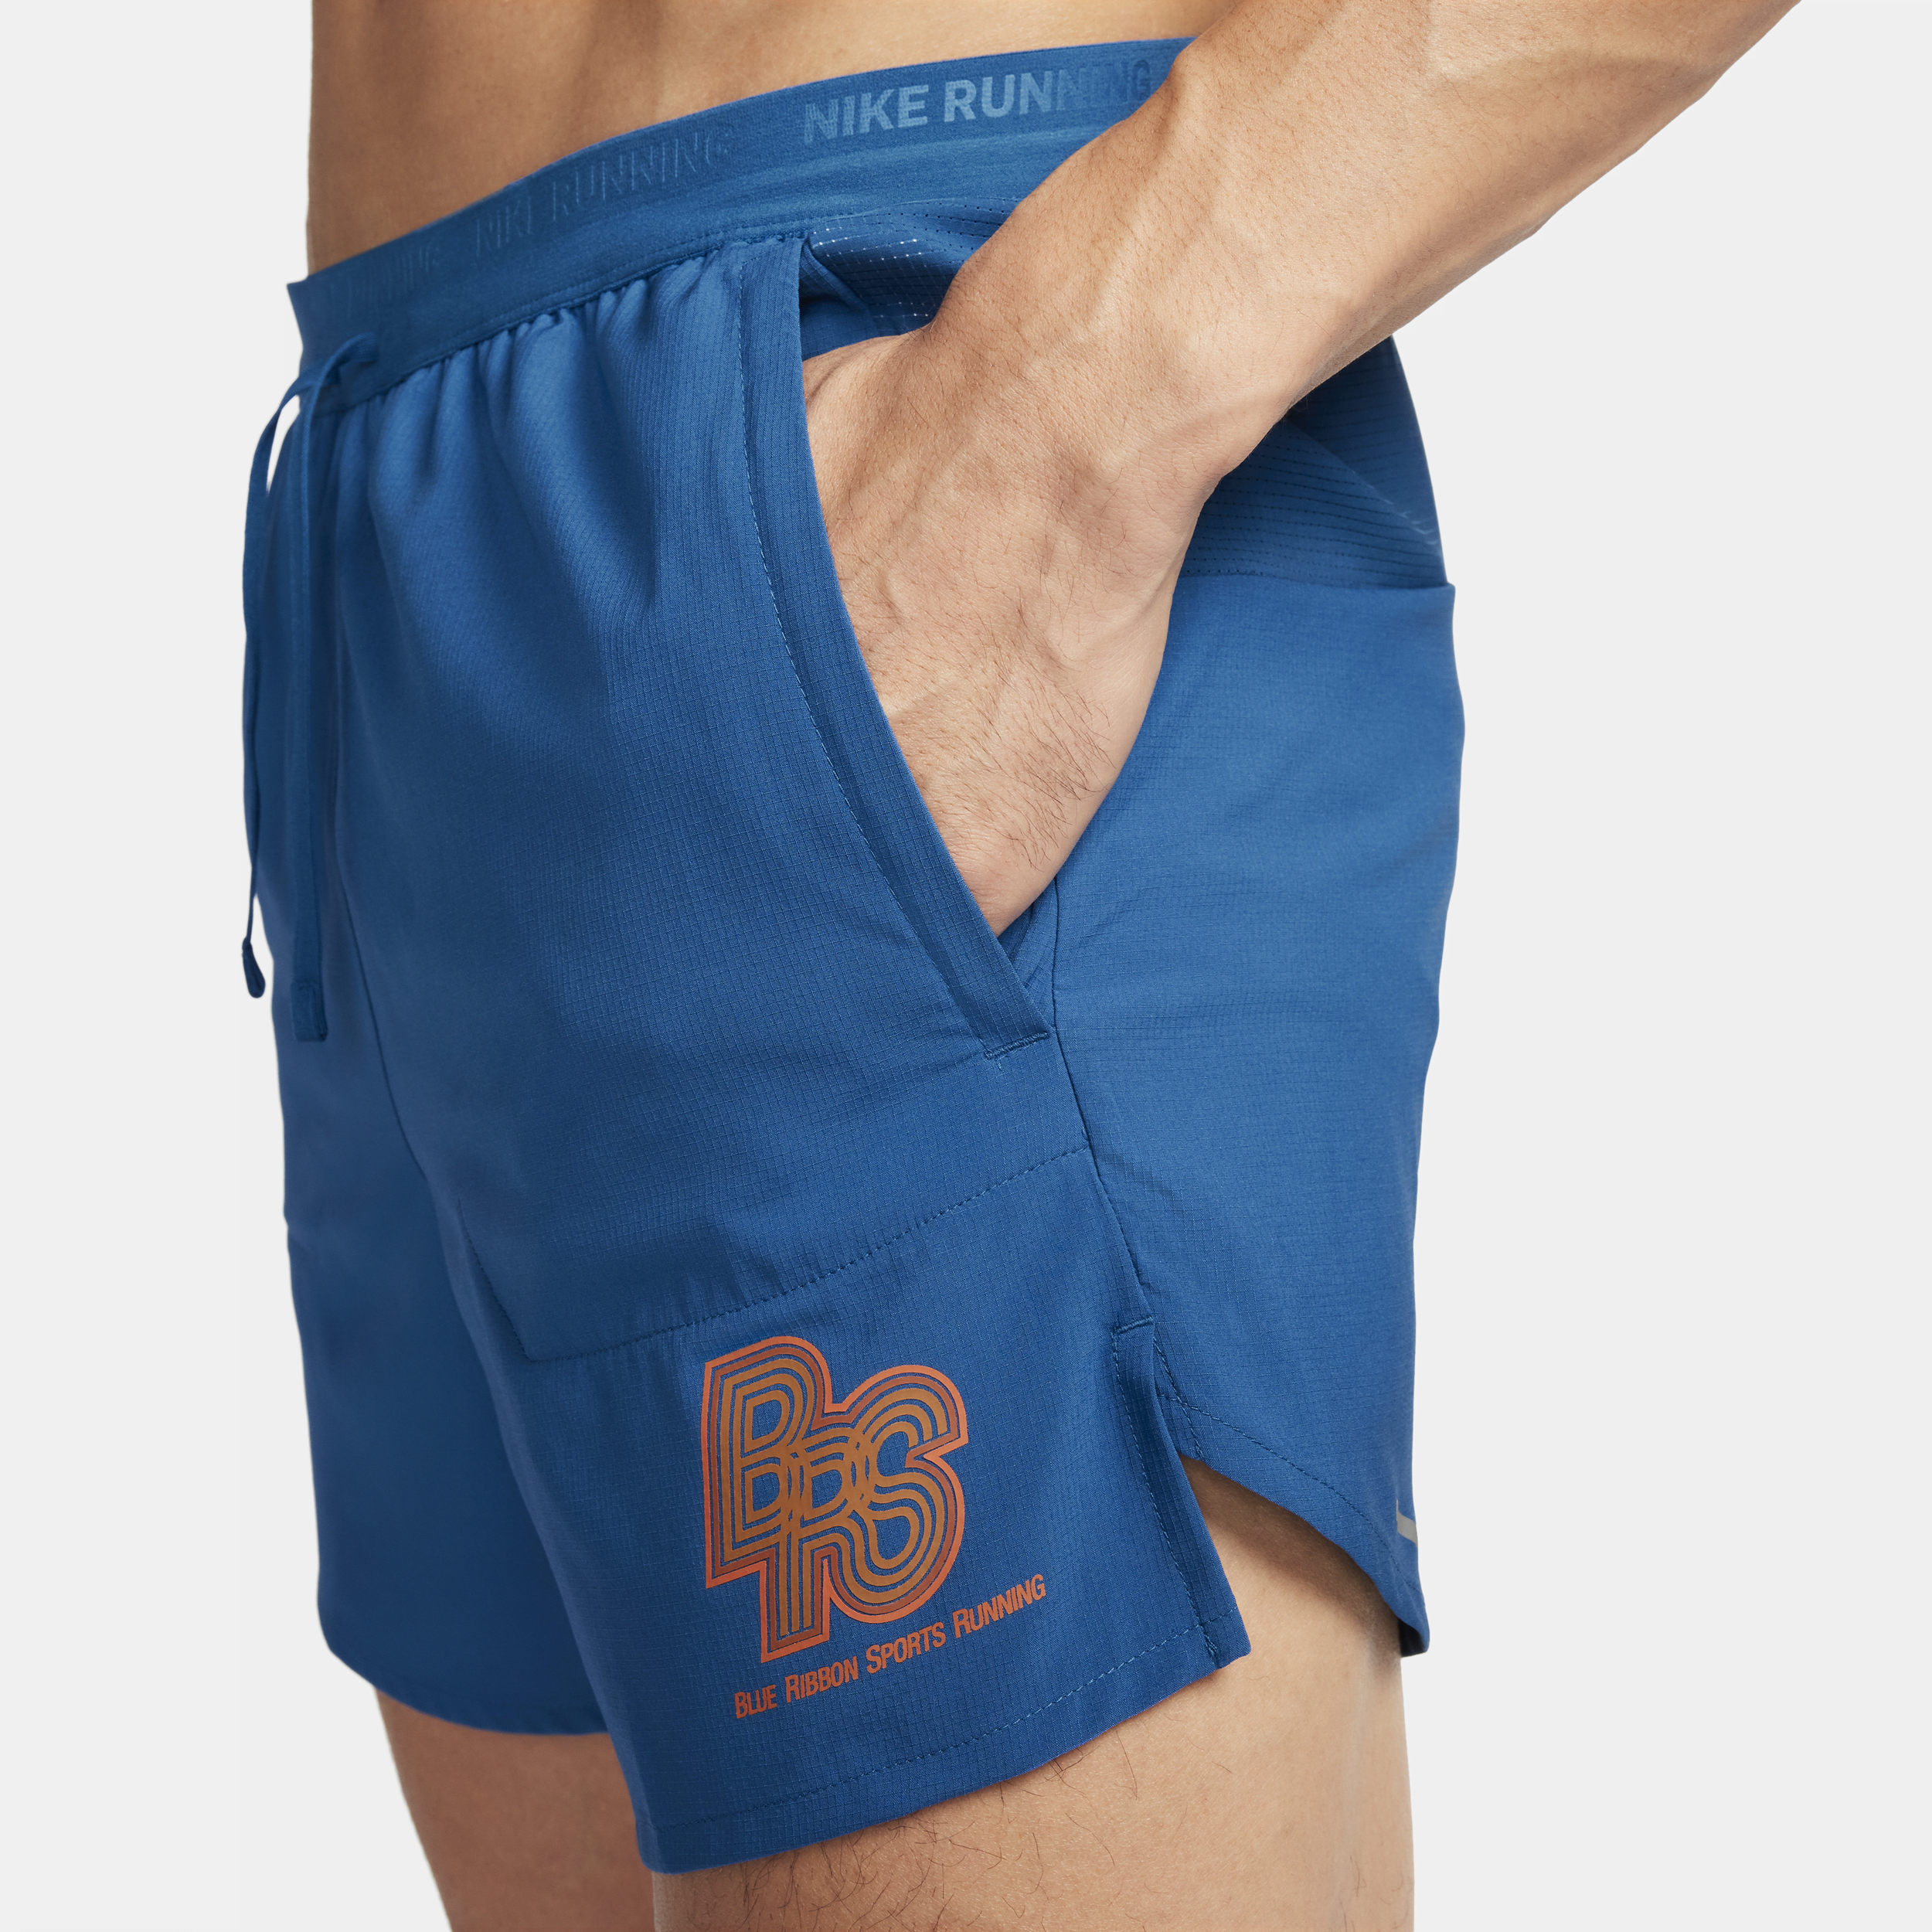 Nike Running Energy Stride hardloopshorts met binnenbroek voor heren (13 cm) Blauw